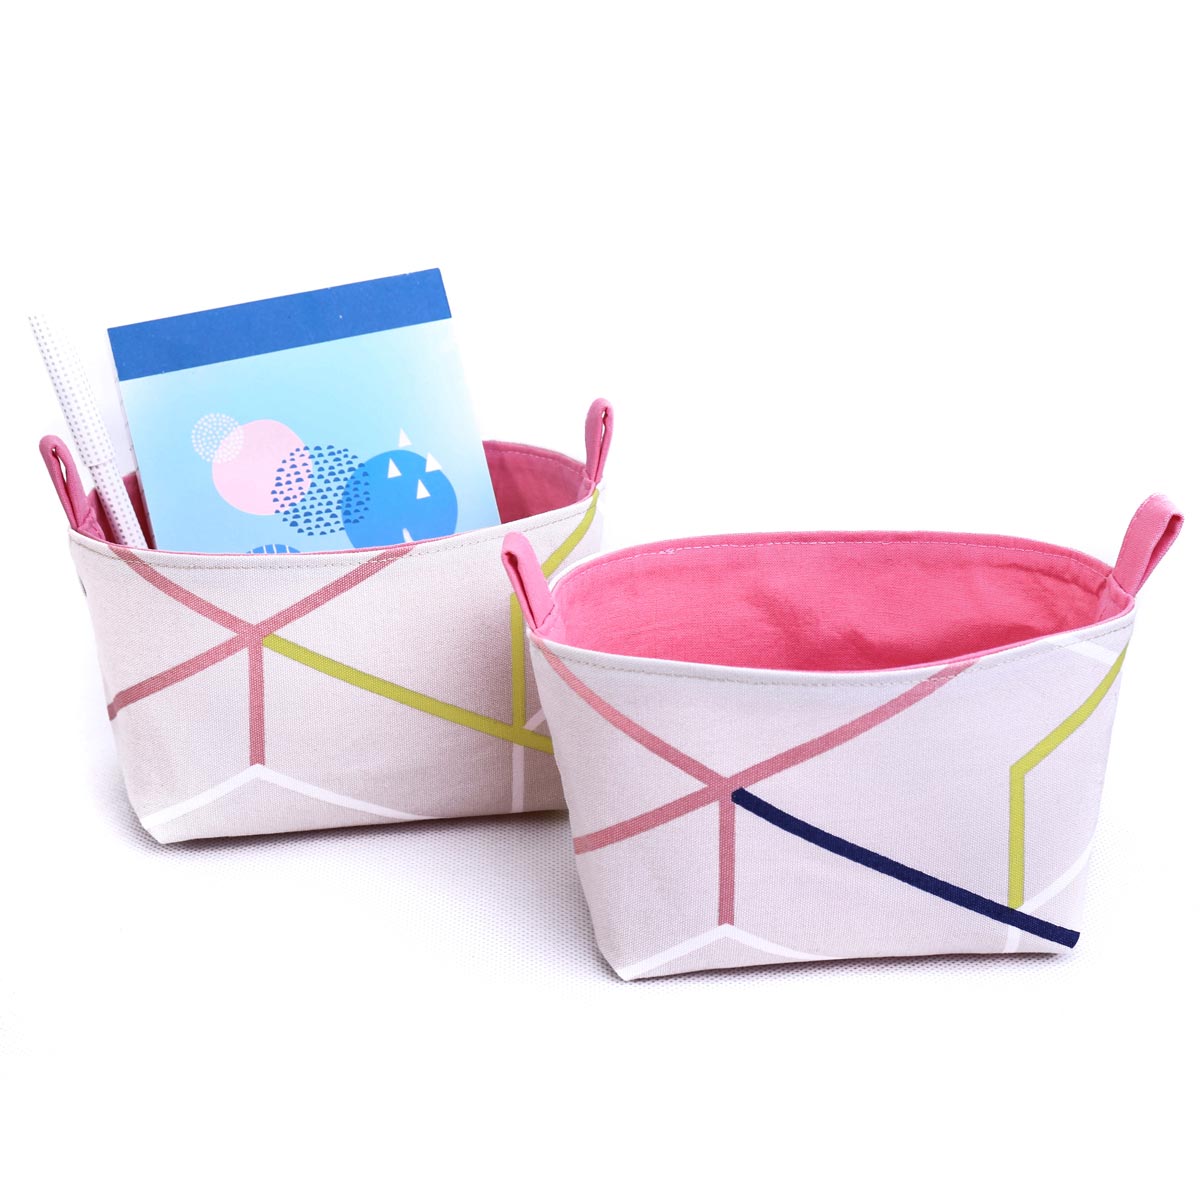 small-baskets-desk-storage-pink-geometric-neutral-decor-mimi-handmade-australia